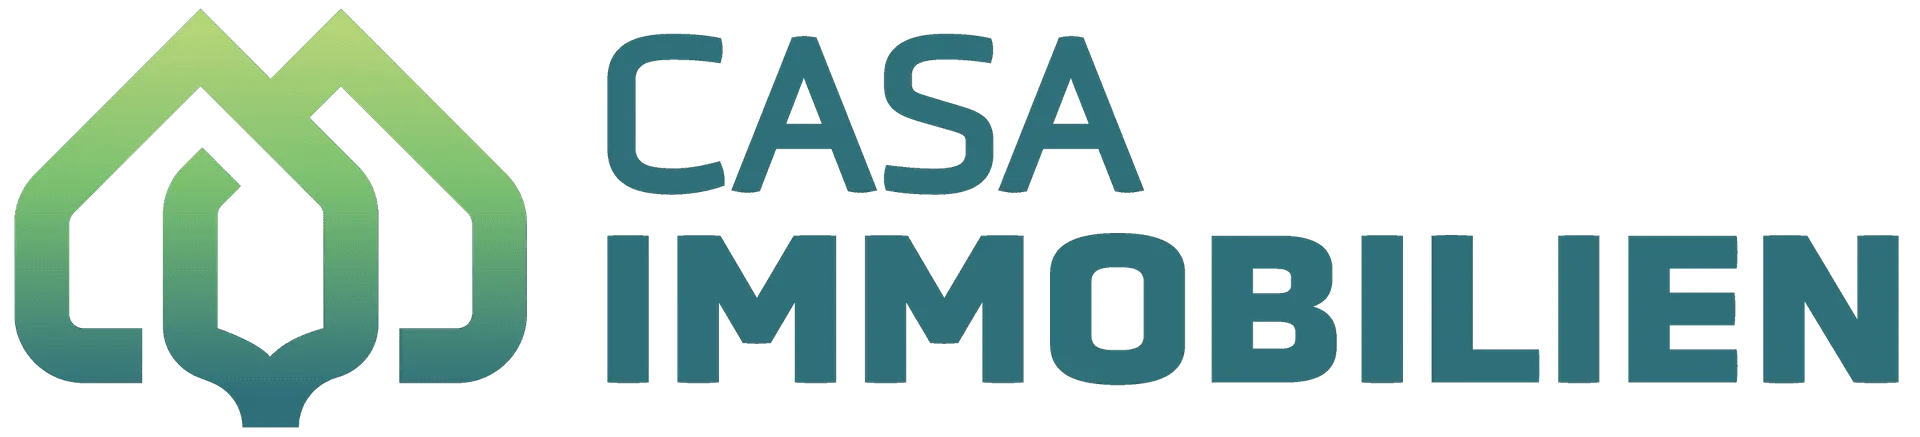 Makler Casa Immobilien logo